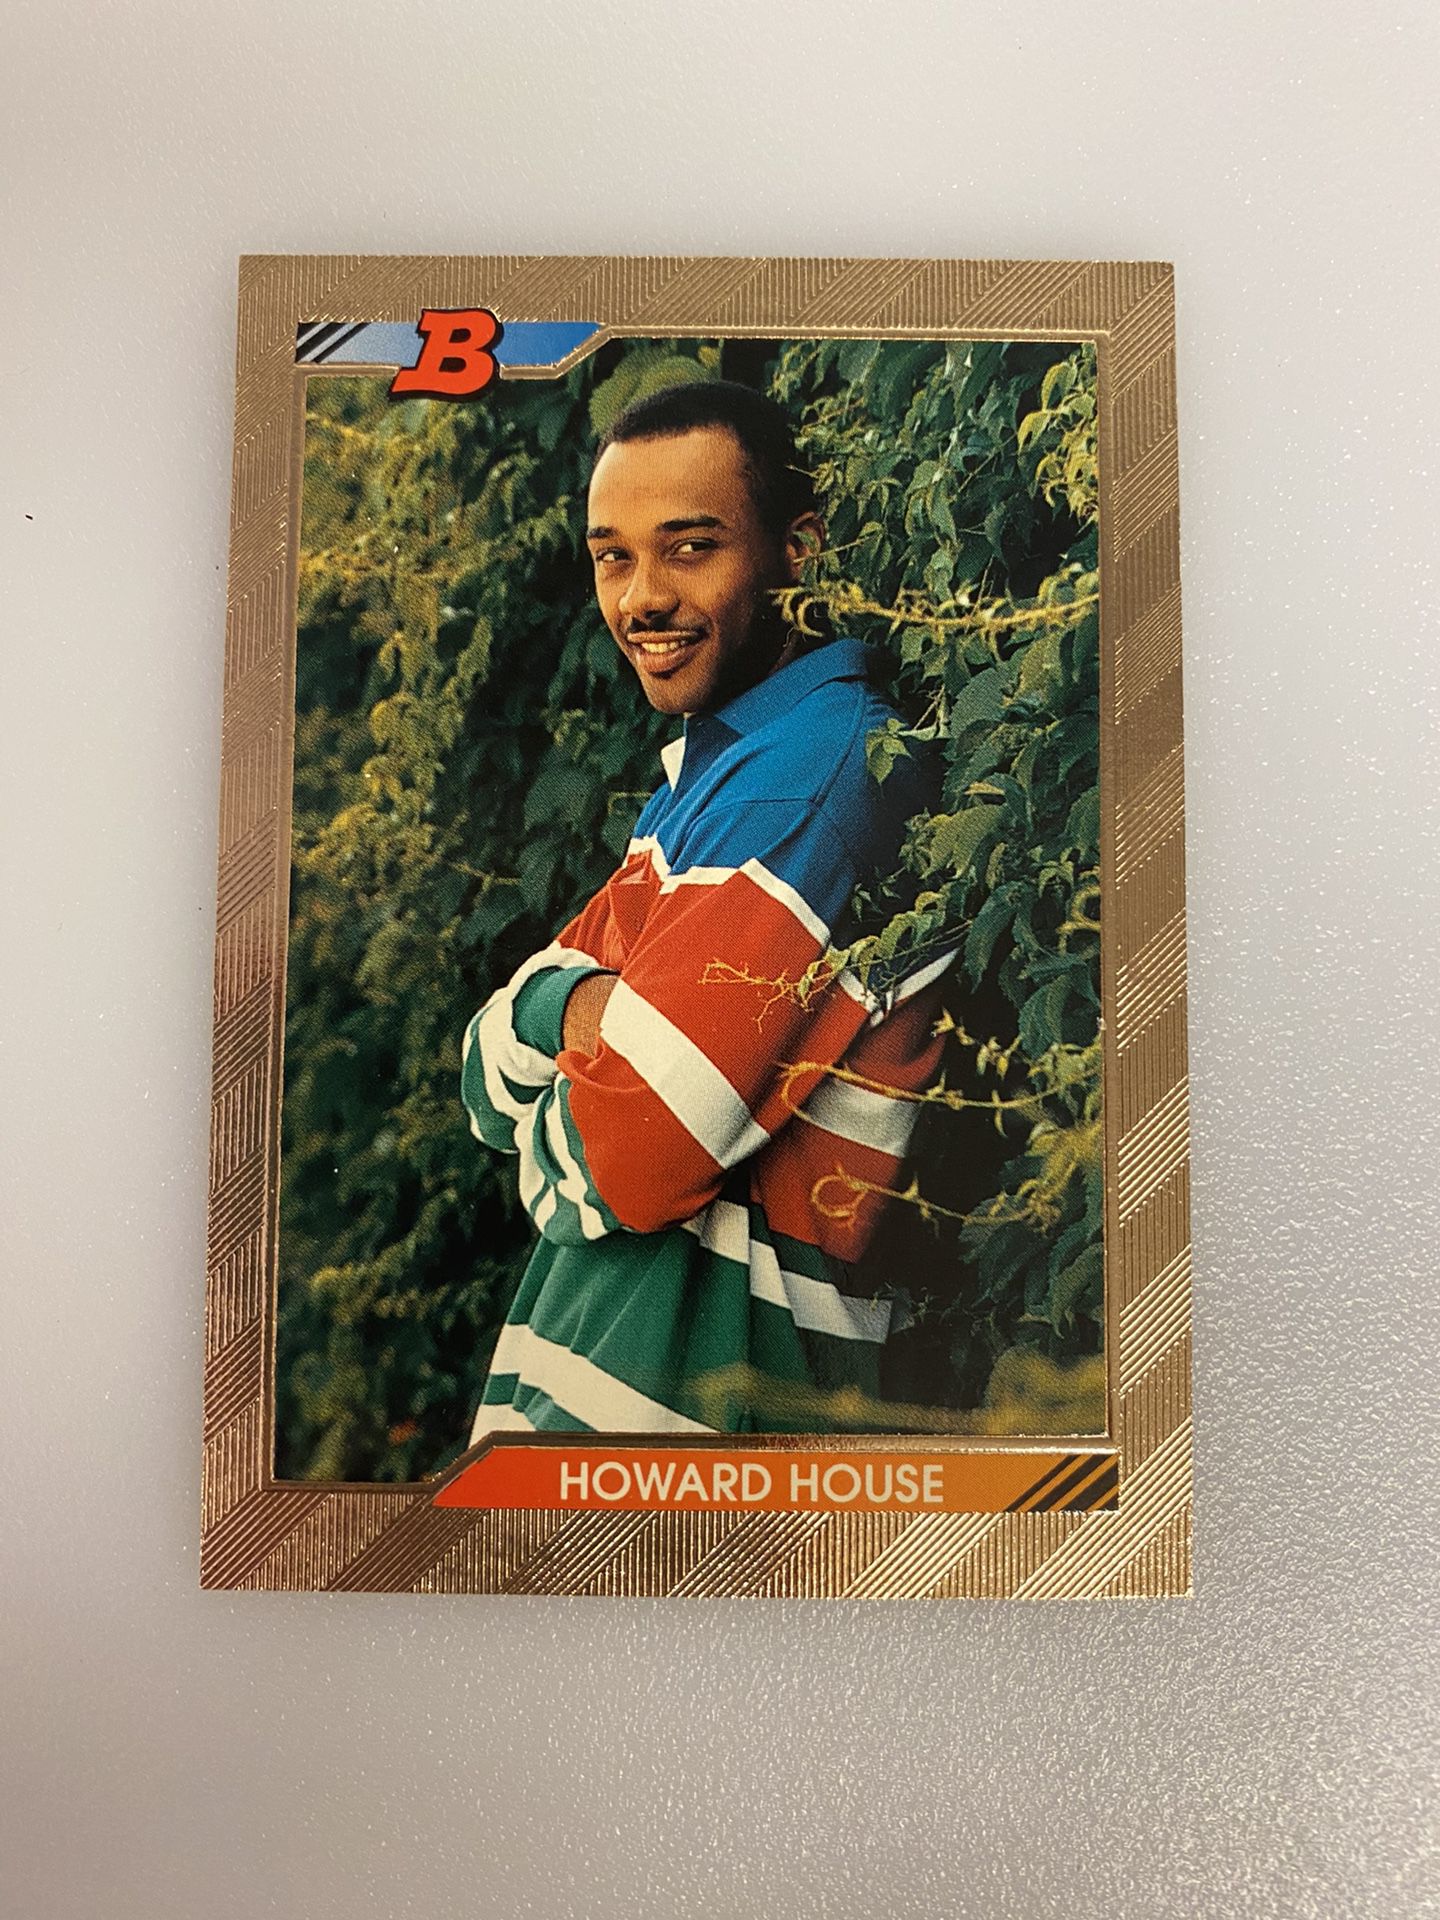 1992 Bowman Milwaukee Brewers Baseball Card #581 Howard House FOIL Rookie